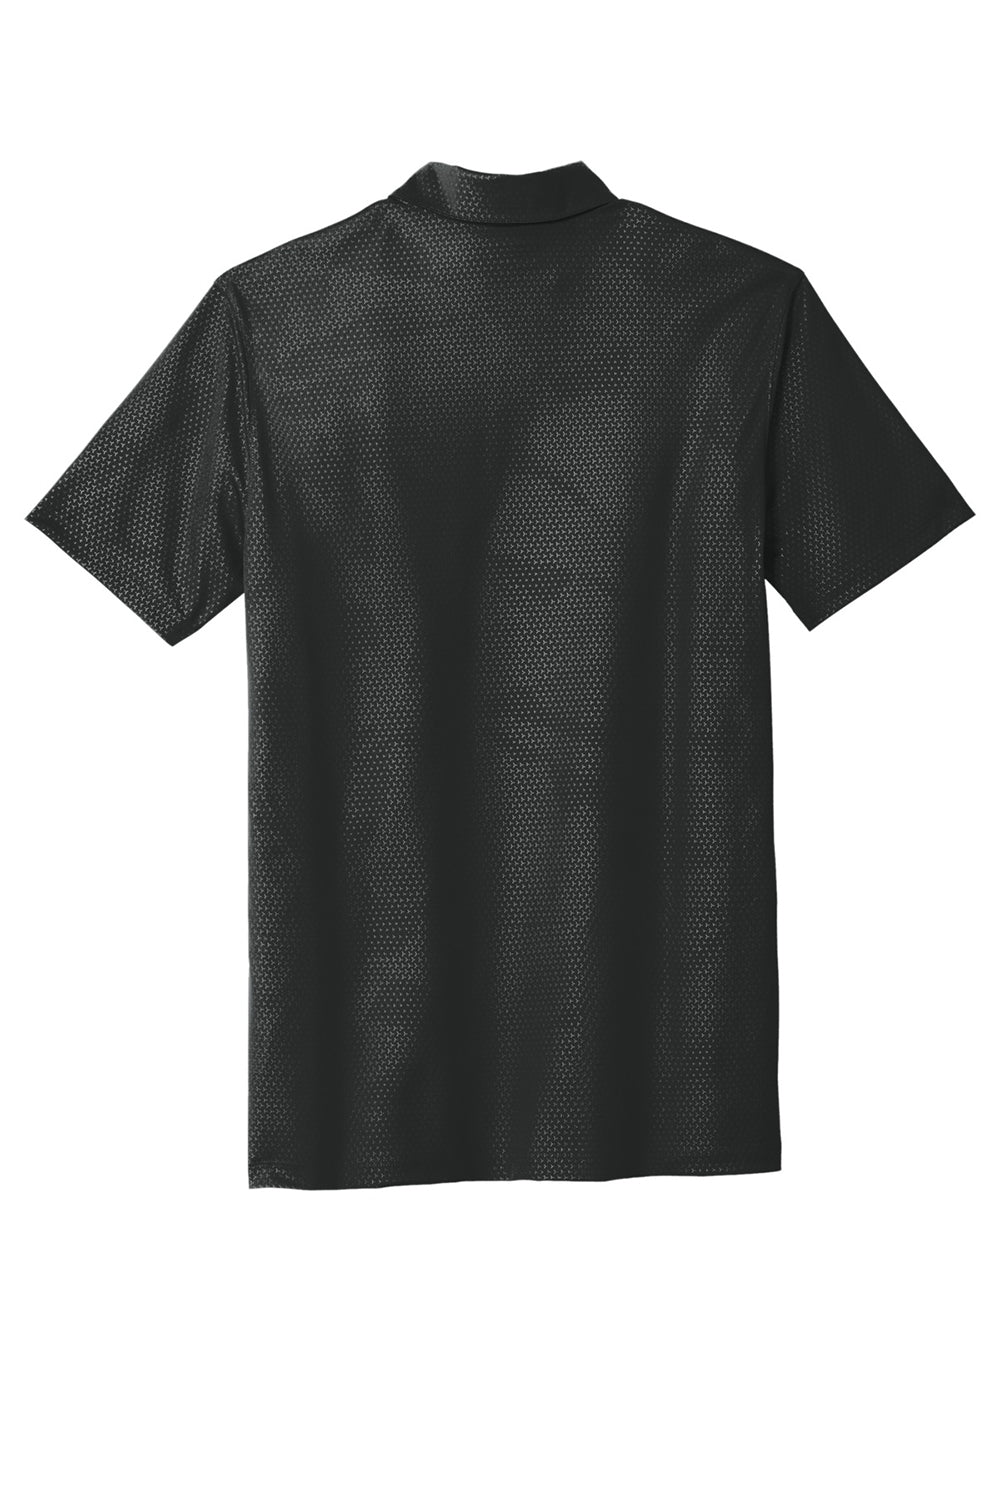 Nike 838964 Mens Dri-Fit Moisture Wicking Short Sleeve Polo Shirt Black Flat Back